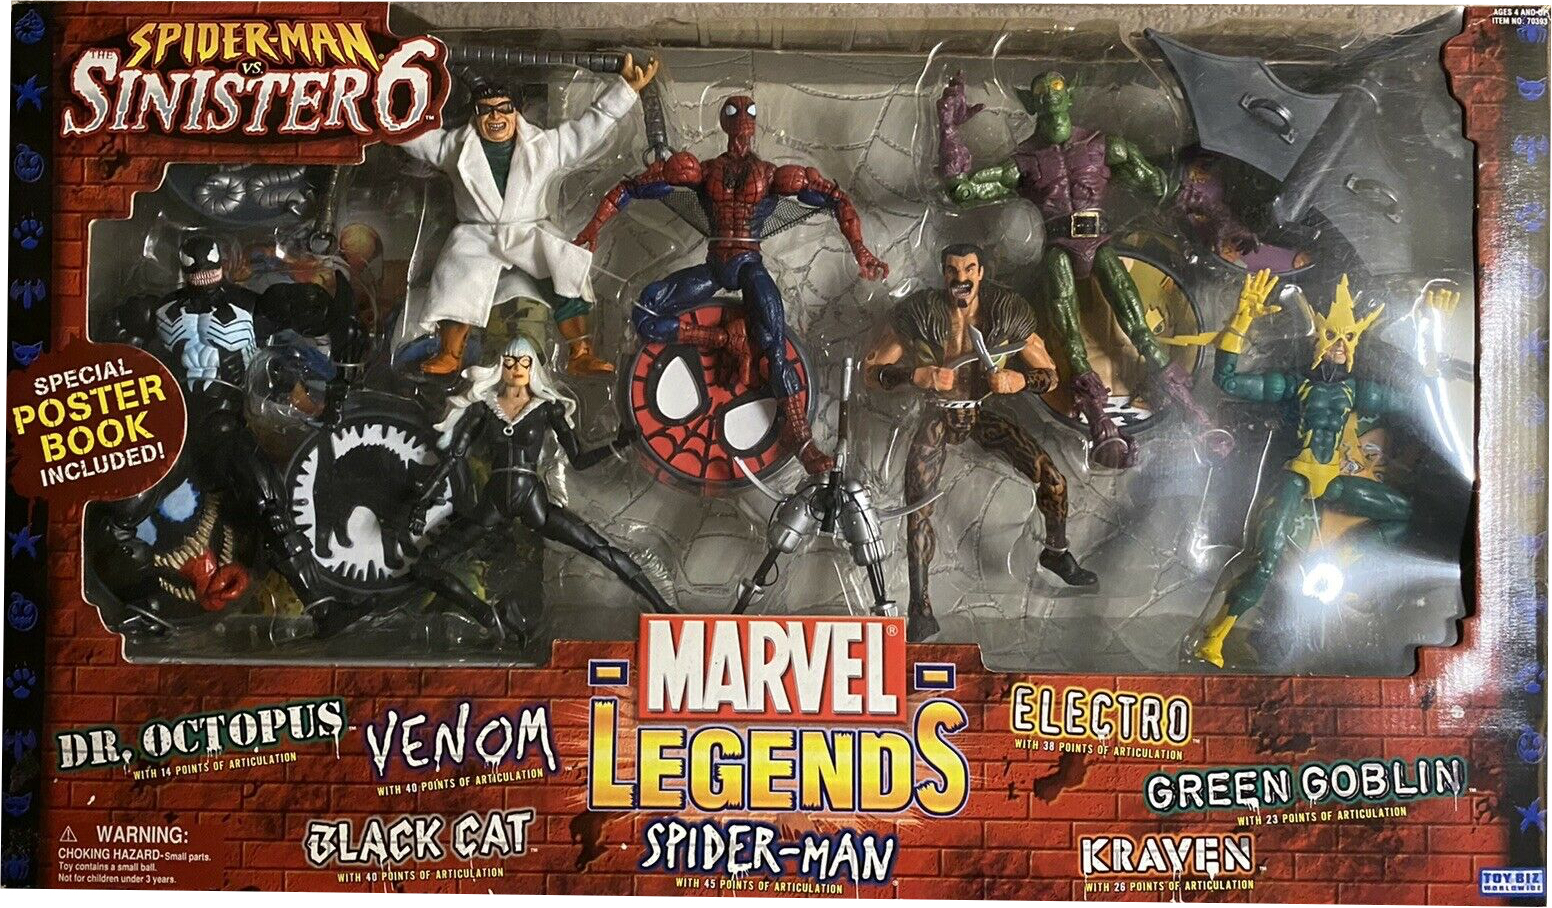 Marvel Legends Box Sets (Toybiz) Spider-Man vs Sinister 6 Box Set